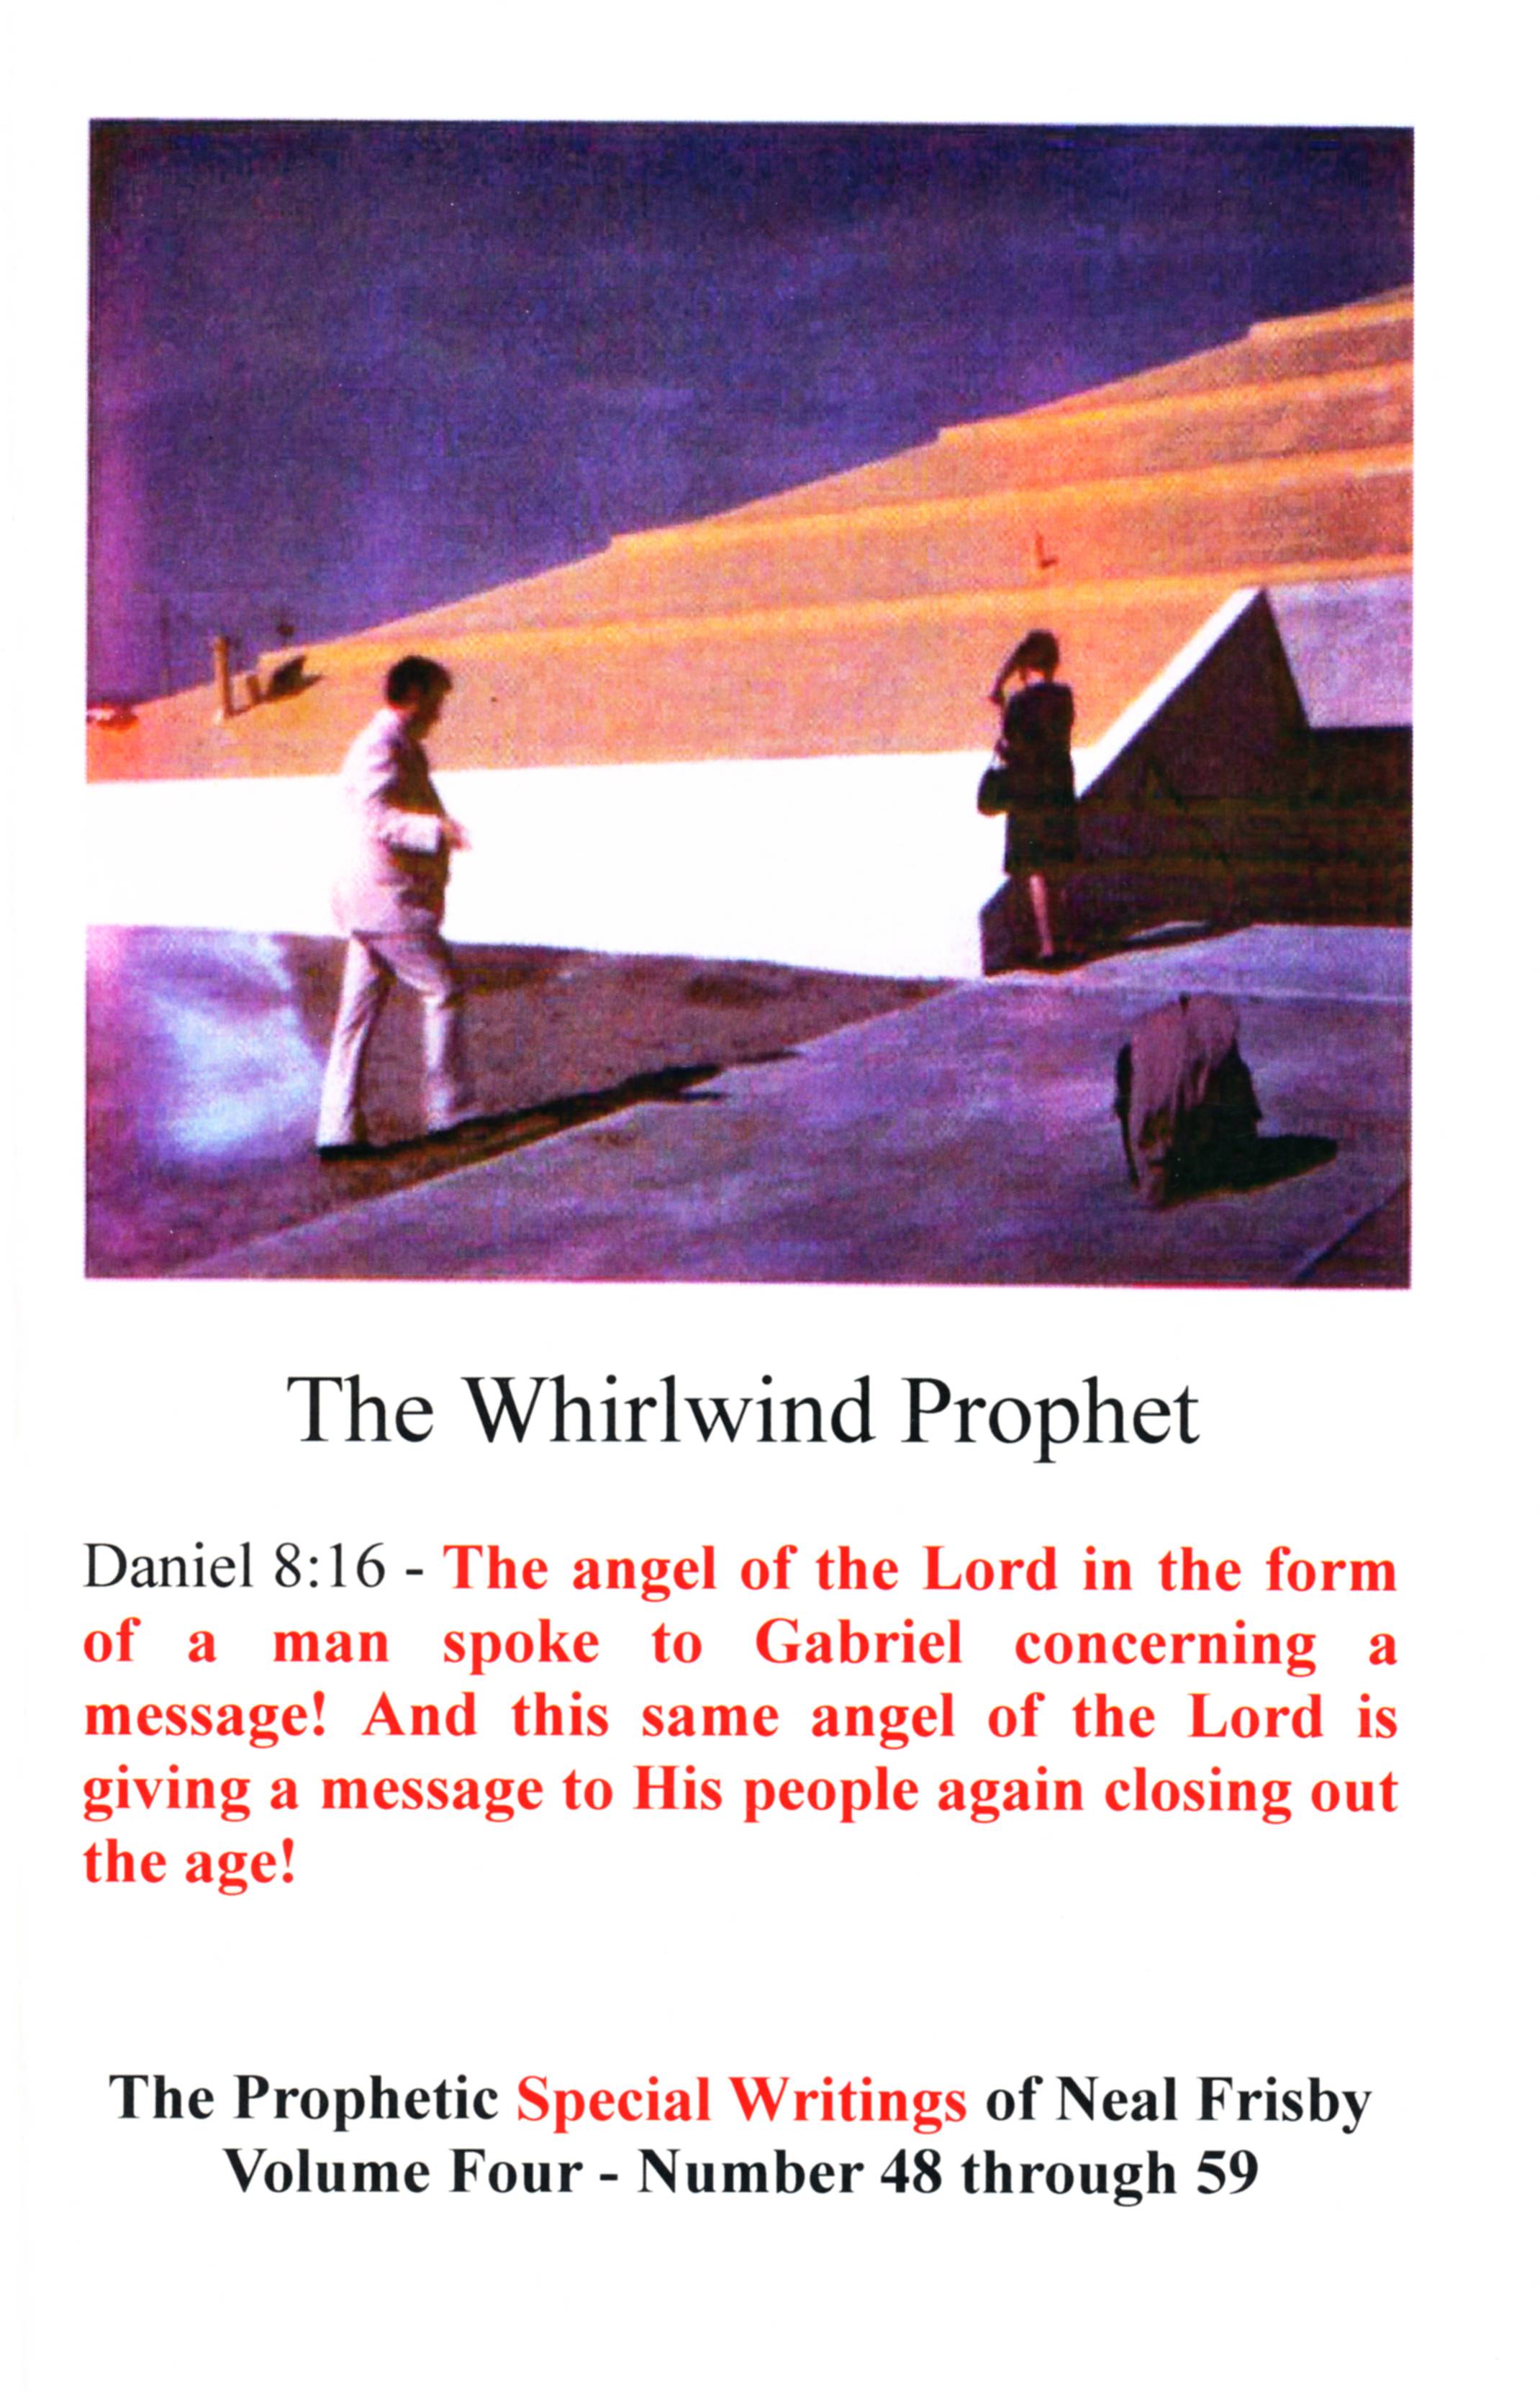 Volume 4 - The Whirlwind Prophet!